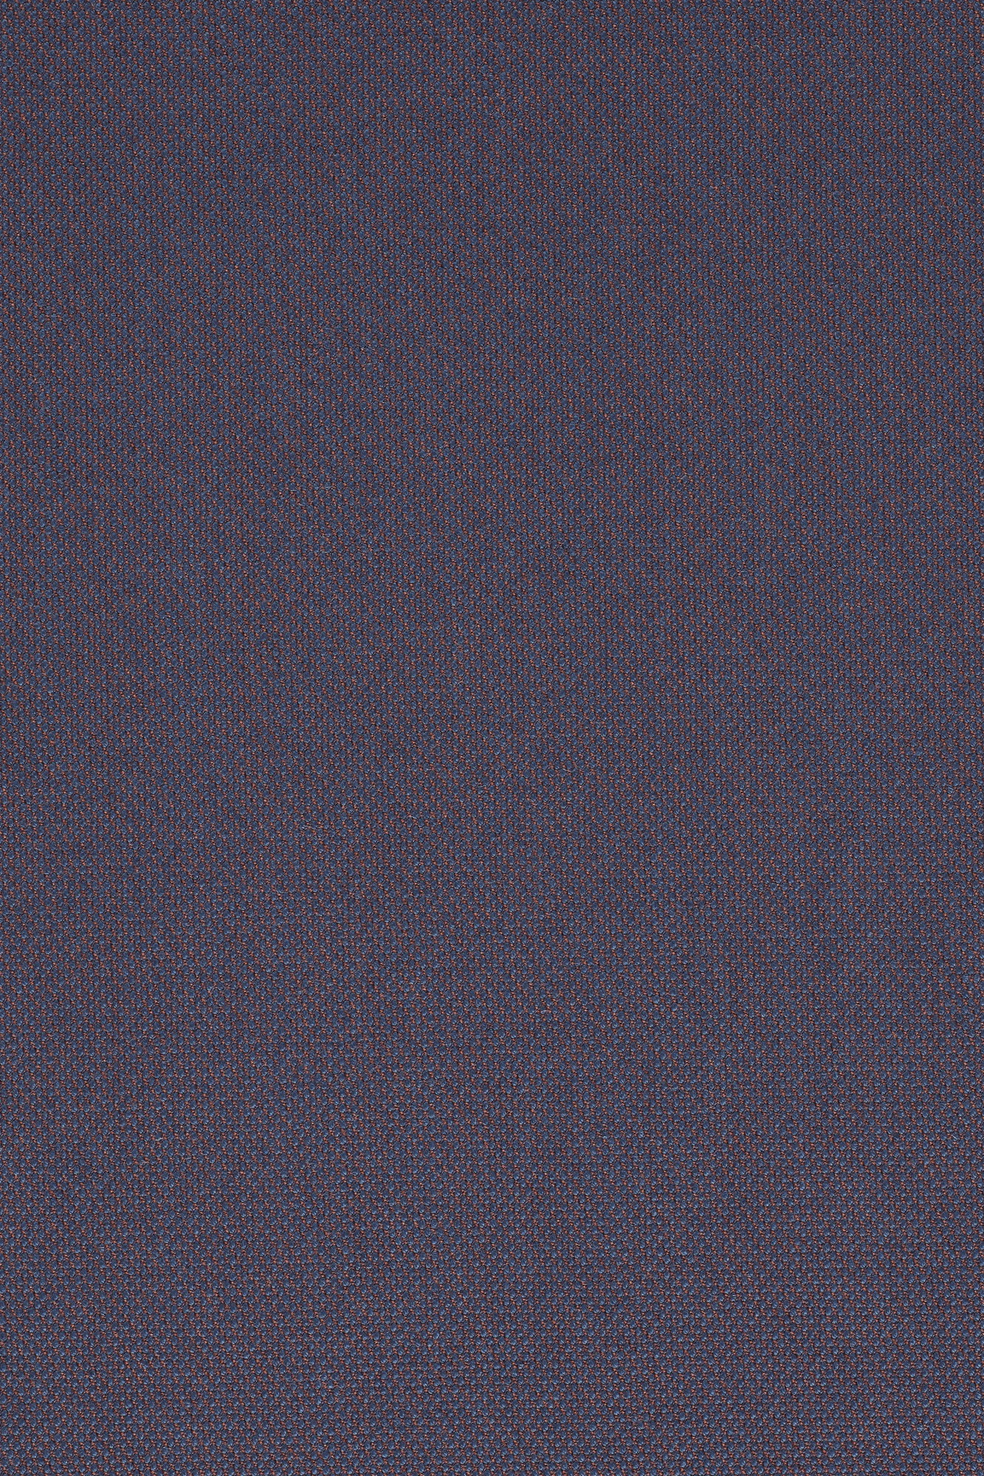 Fabric sample Steelcut Trio 3 776 blue